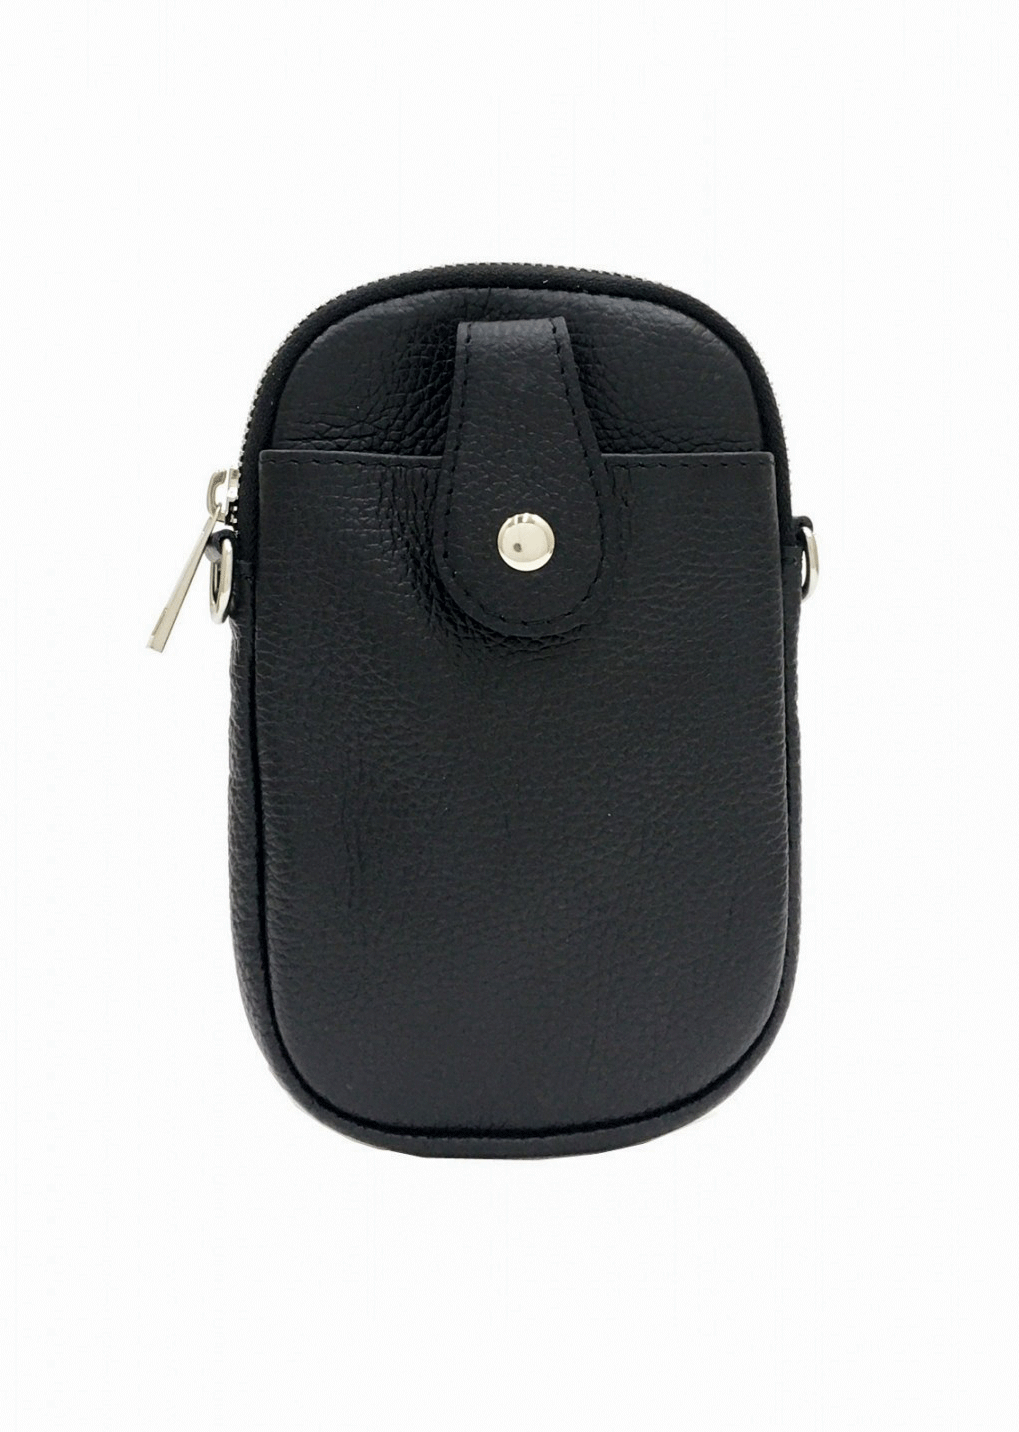 Black Leather Phone Bag